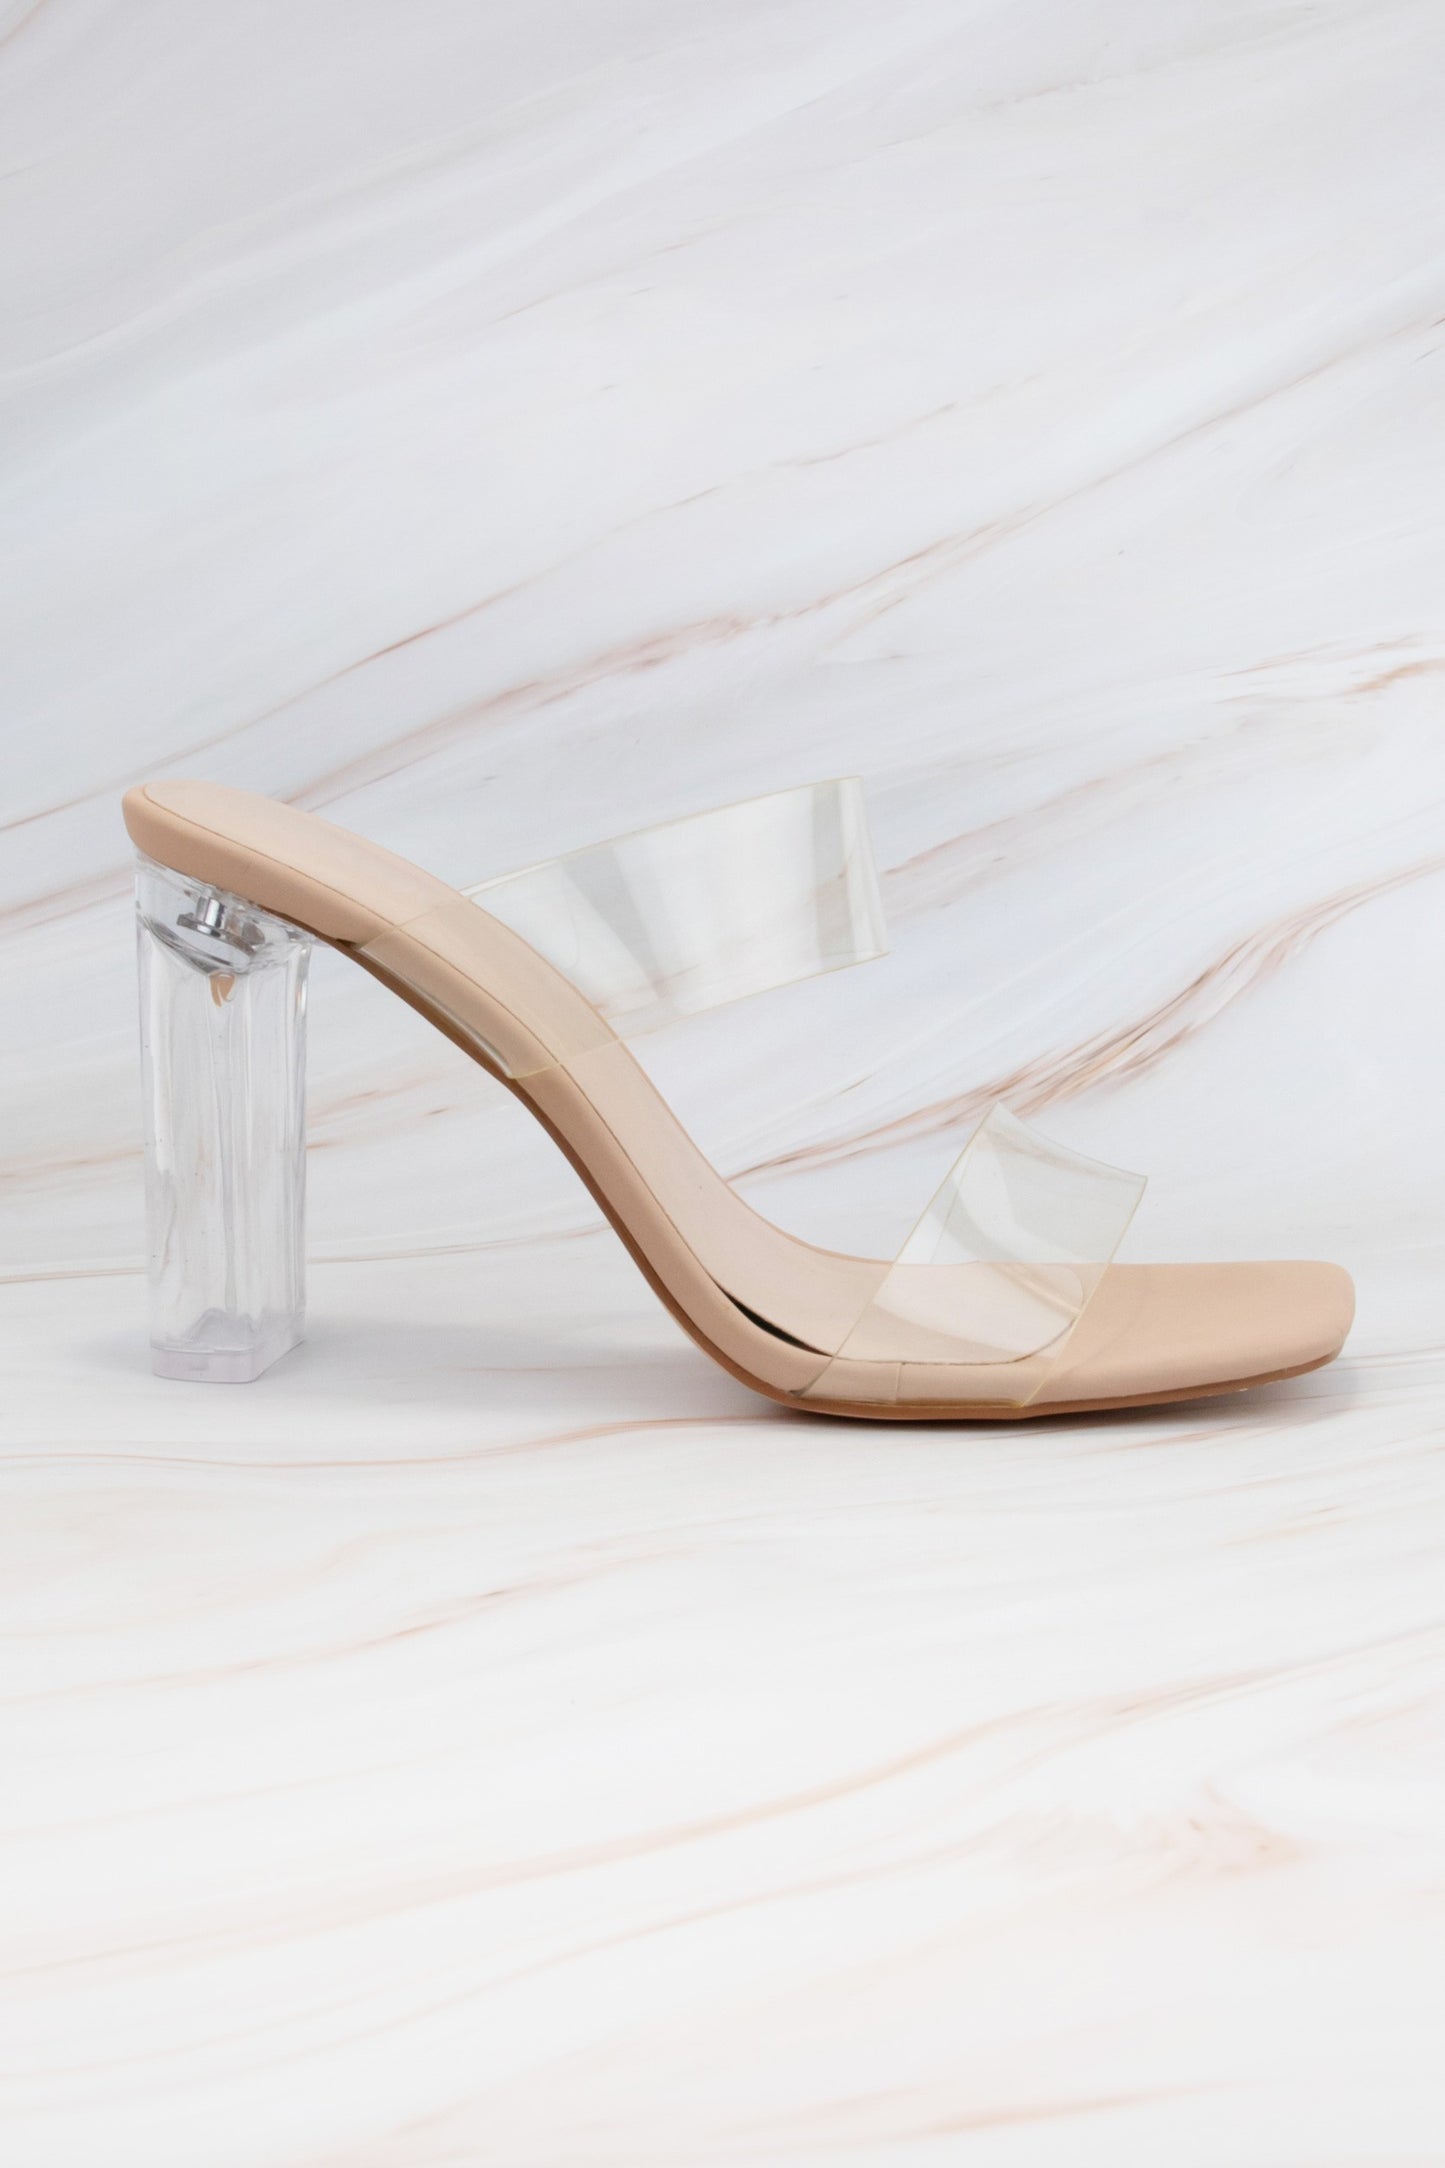 Gretta Clear Double Strap Transparent Heels